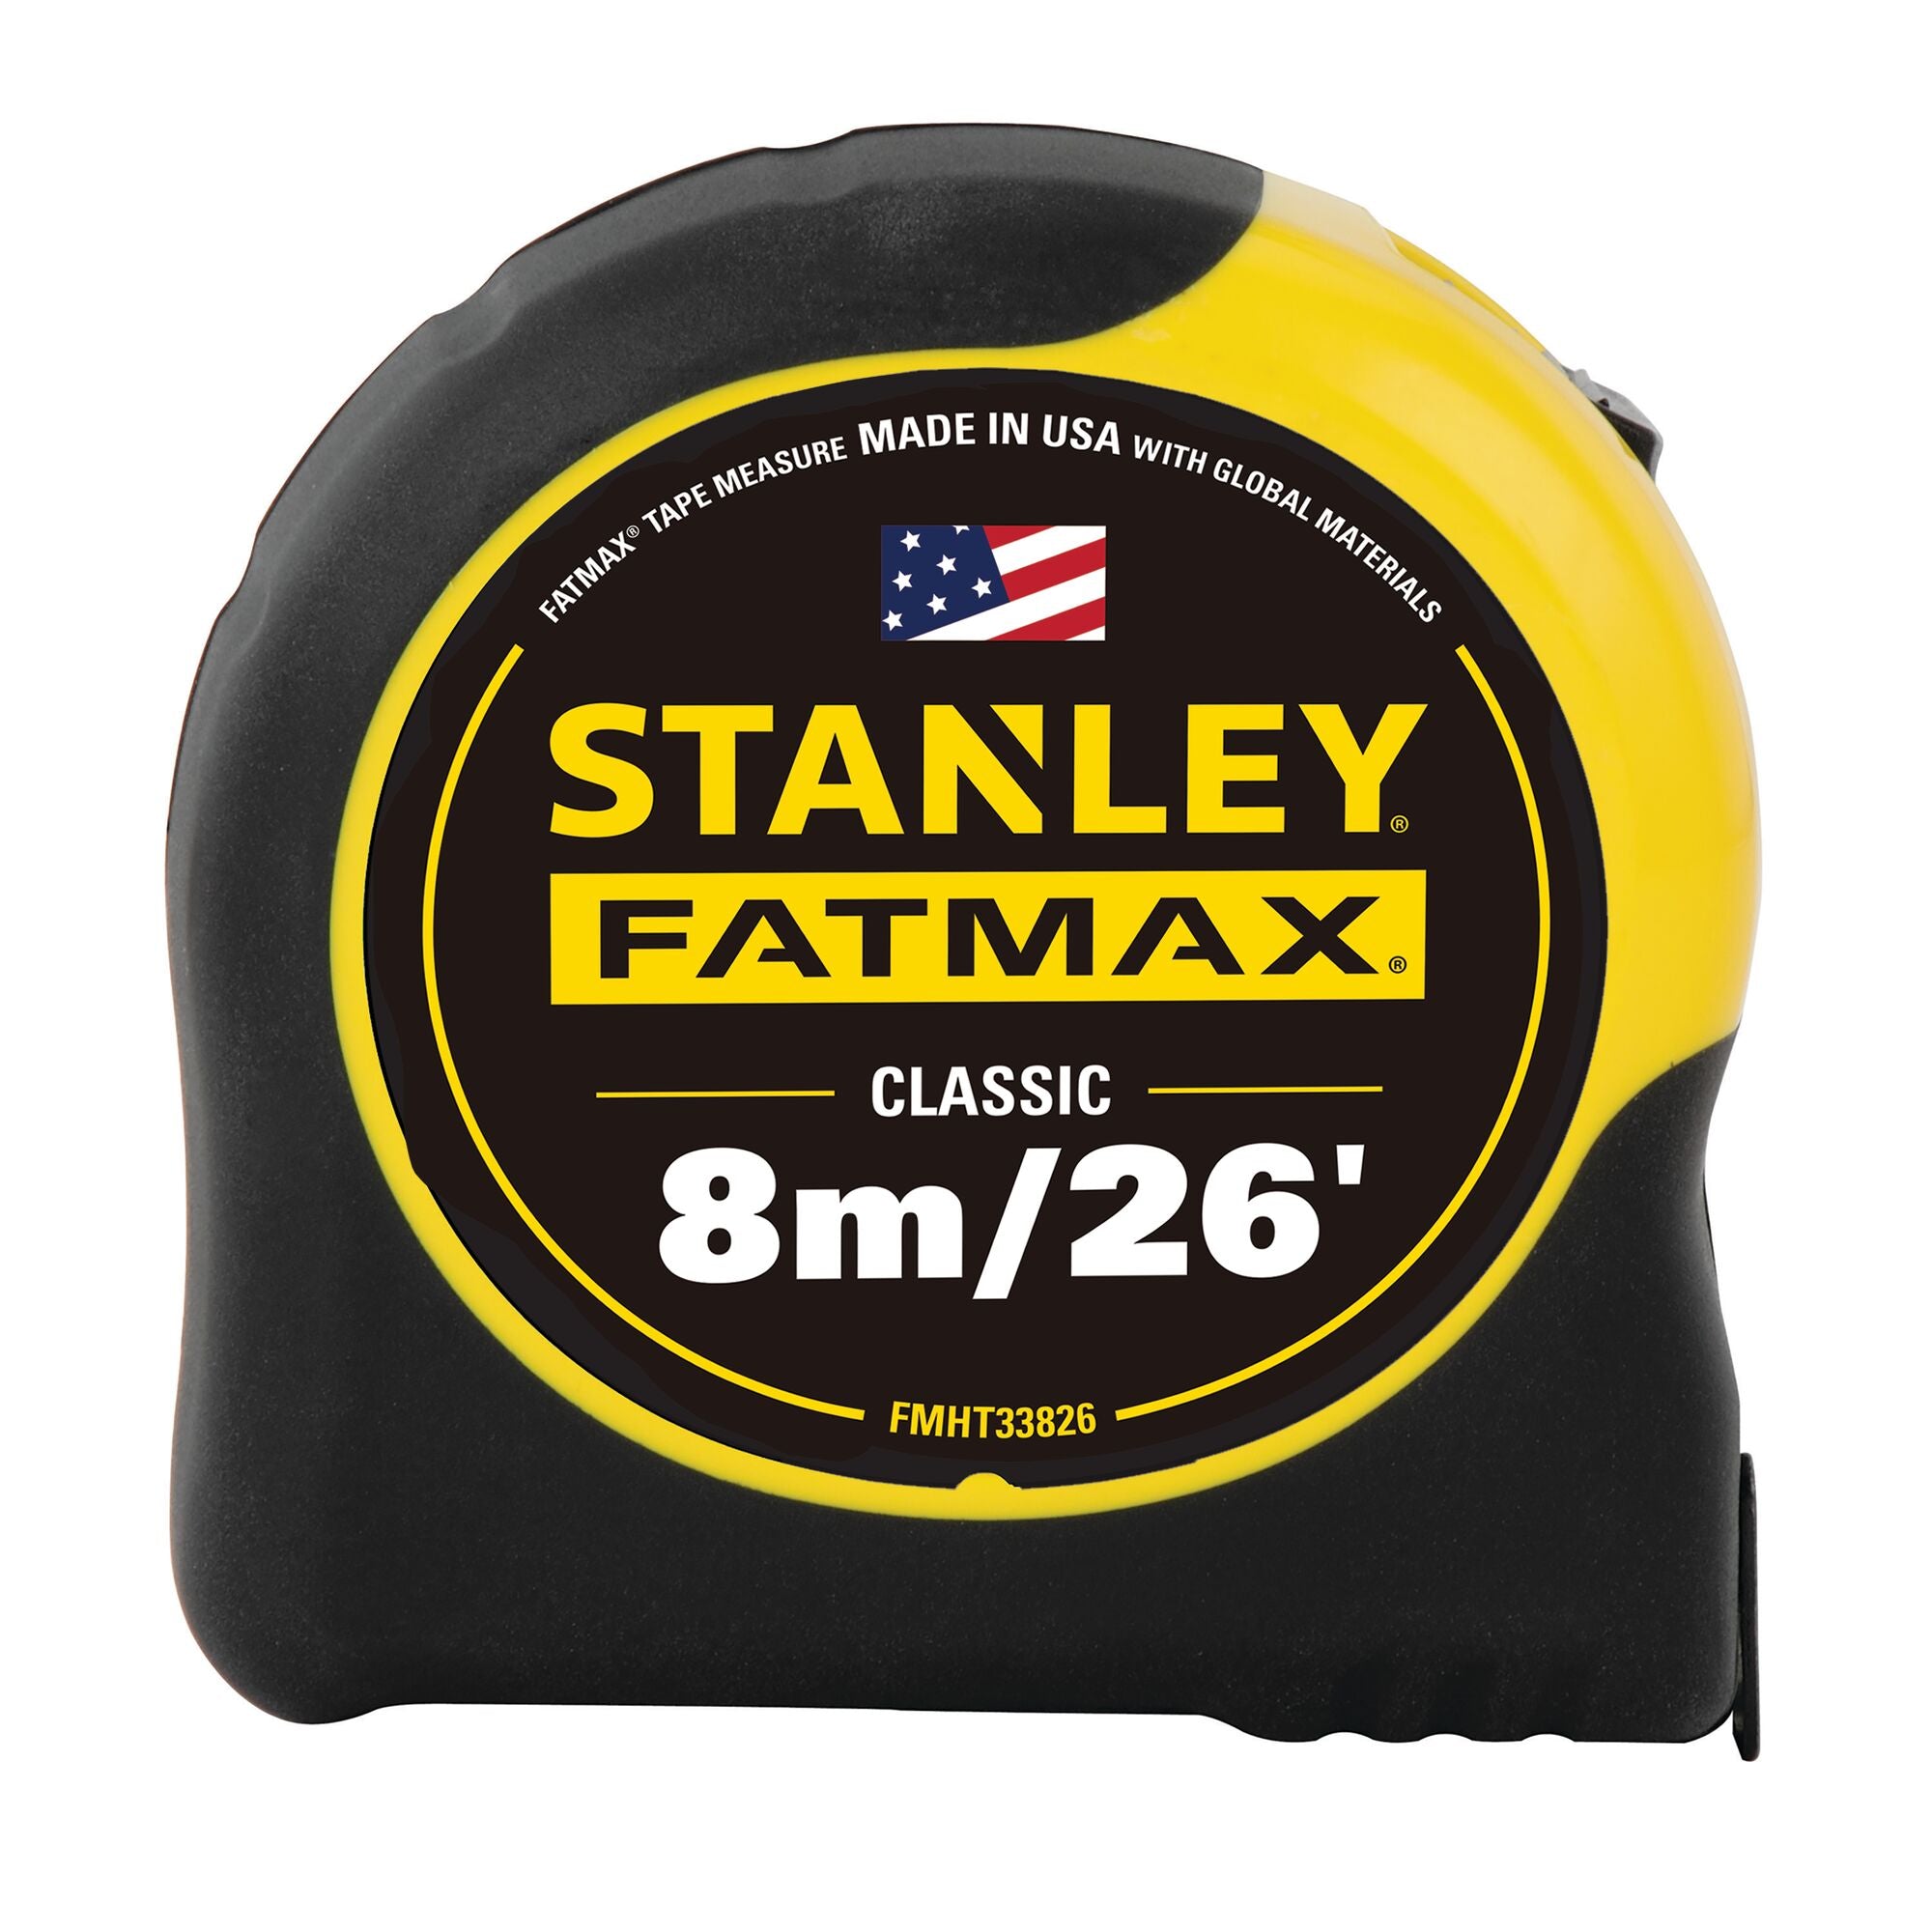 STANLEY® FATMAX 1-1/4? X 8M/26? TAPE MEASURE